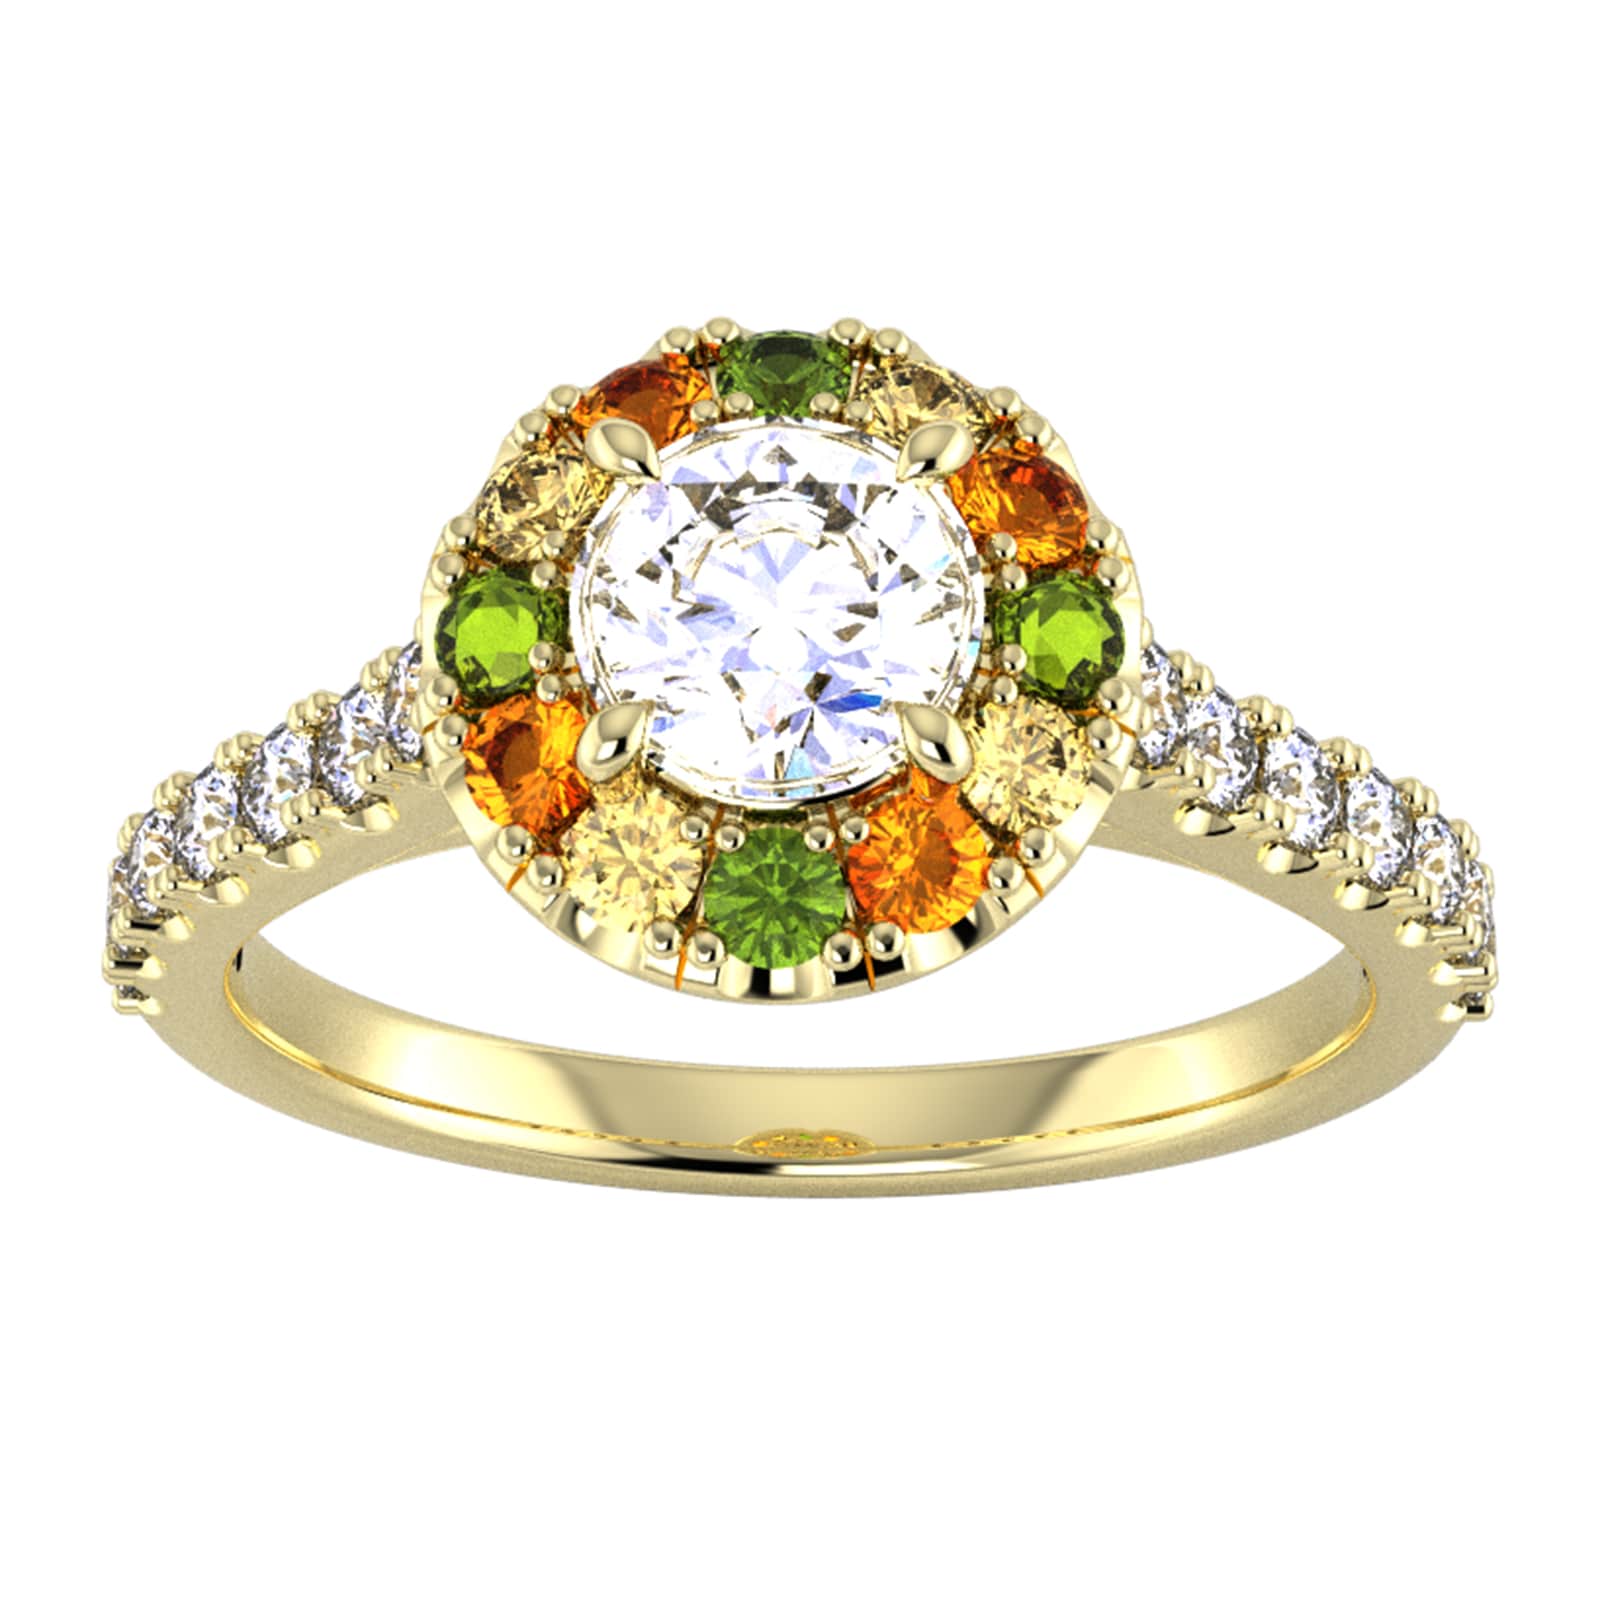 18ct Yellow Gold Diamond & Yellow, Orange, Green Sapphire Halo Ring - Ring Size A.5